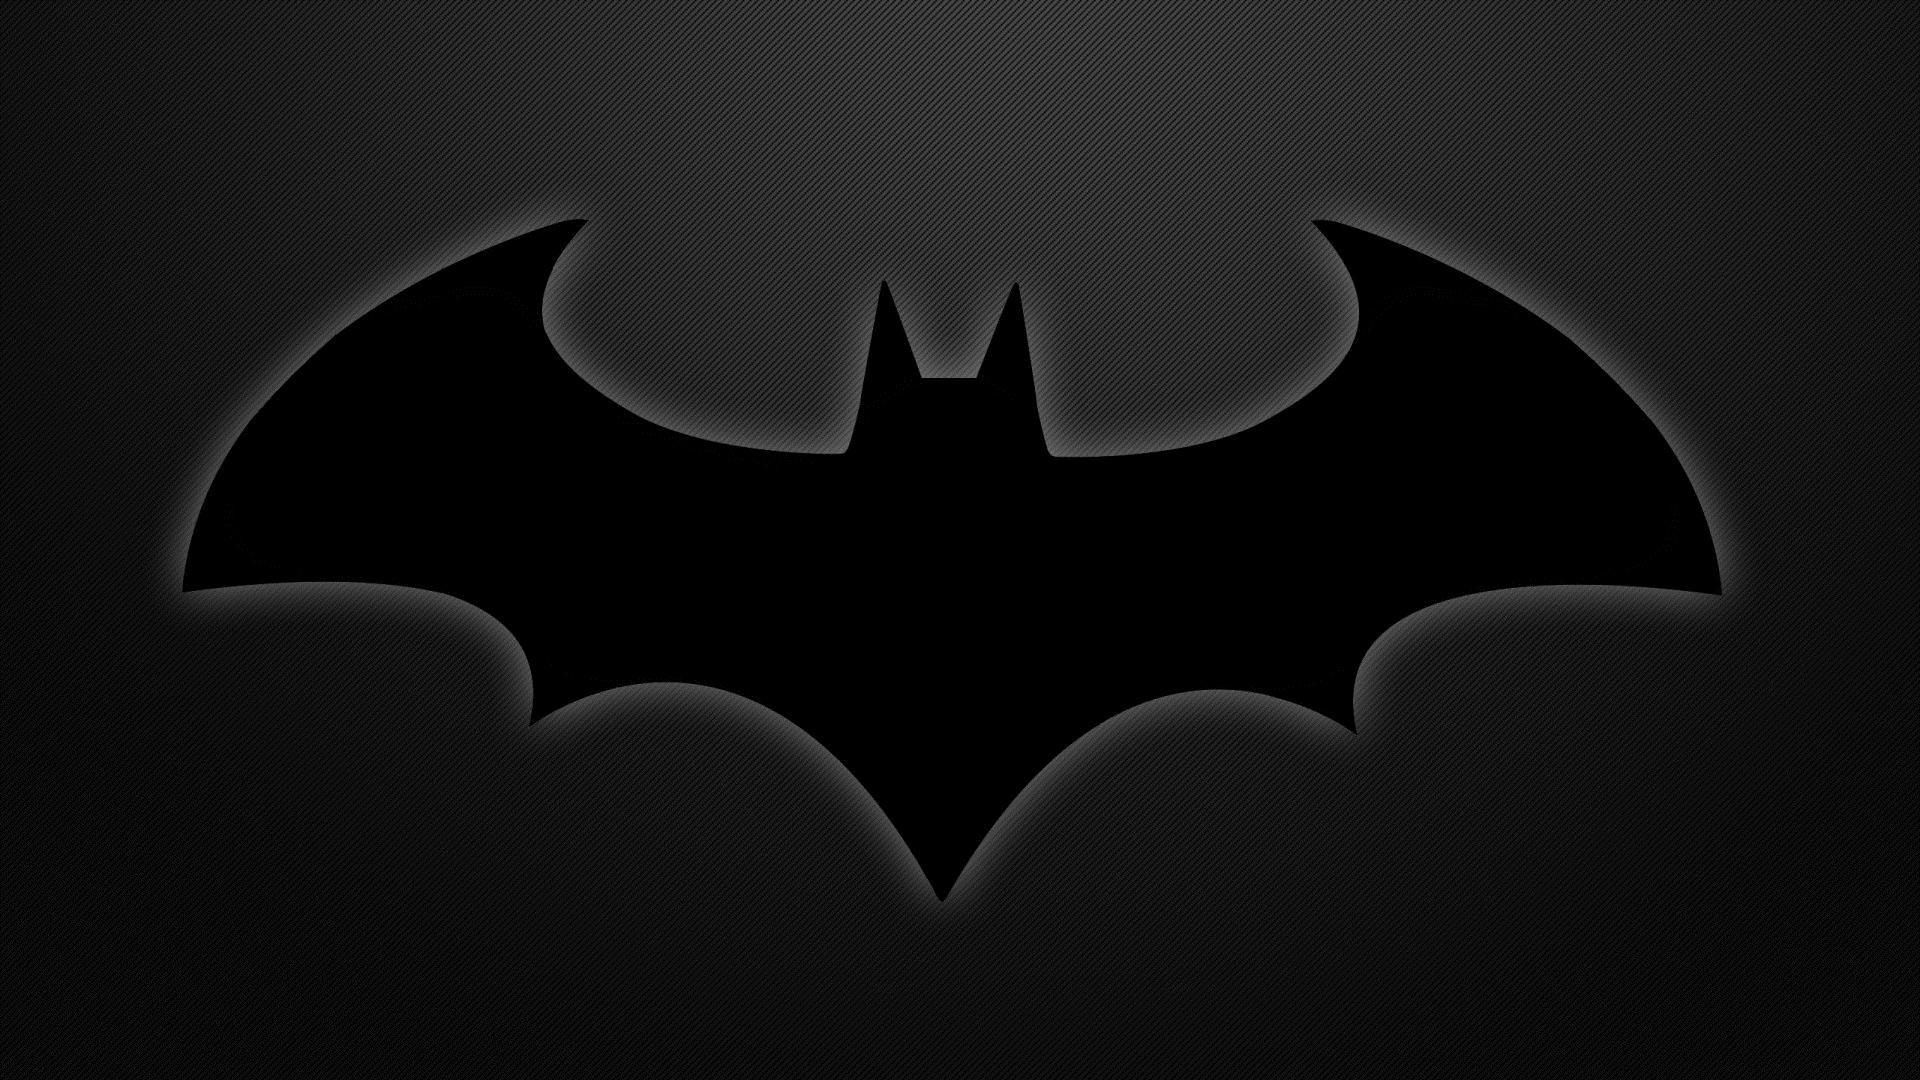 Free Batman Silhouette Wallpaper, Download Free Clip Art, Free Clip Art on Clipart Library